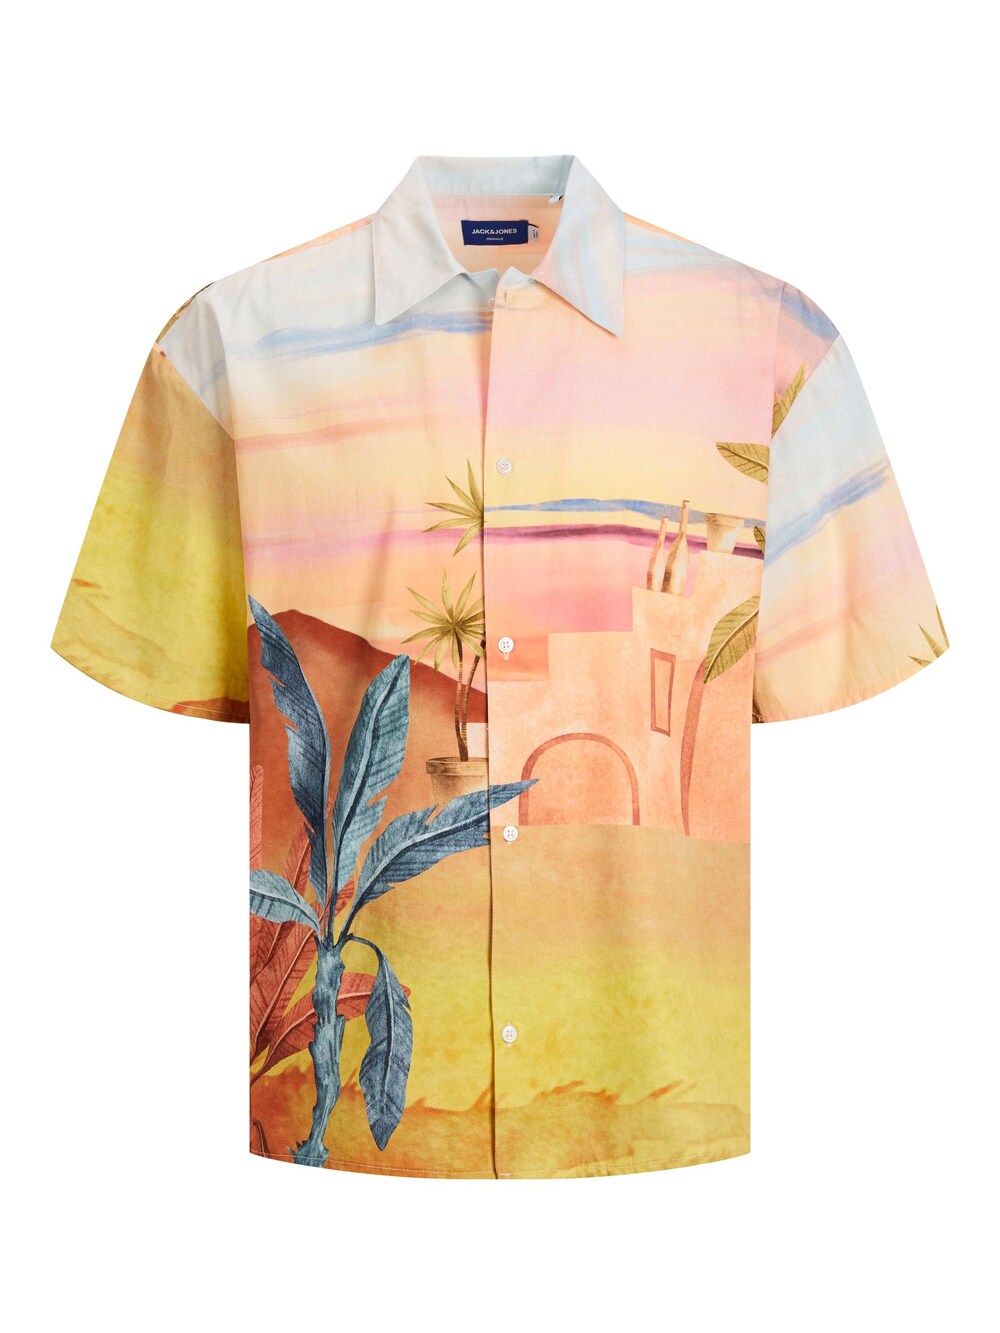 Комфортная рубашка на пуговицах JACK & JONES Landscape, абрикос/лобстер